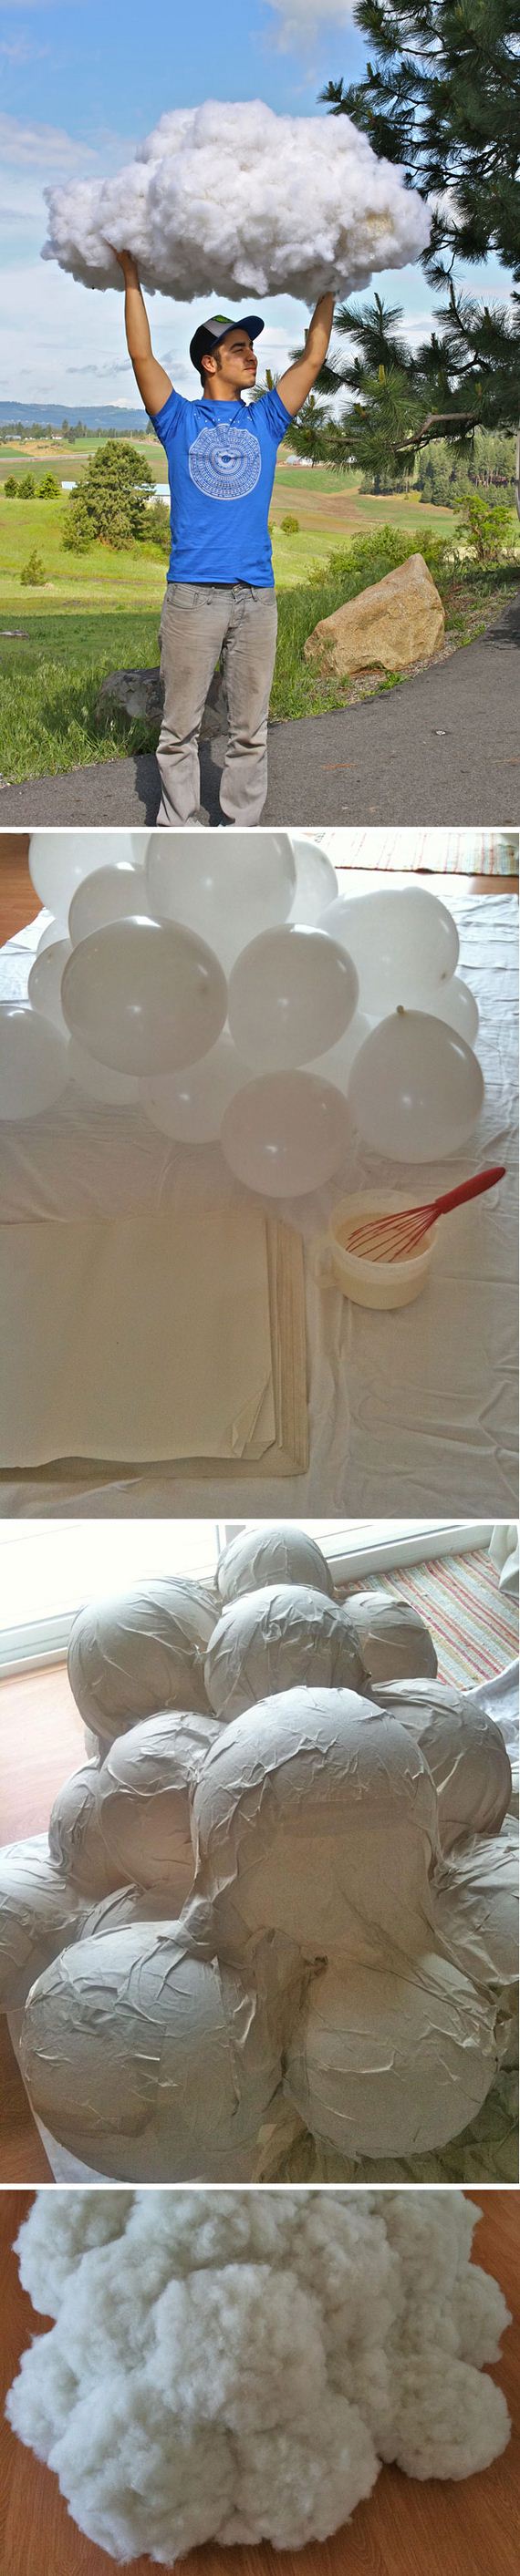 01-diy-balloon-cloud-decoration